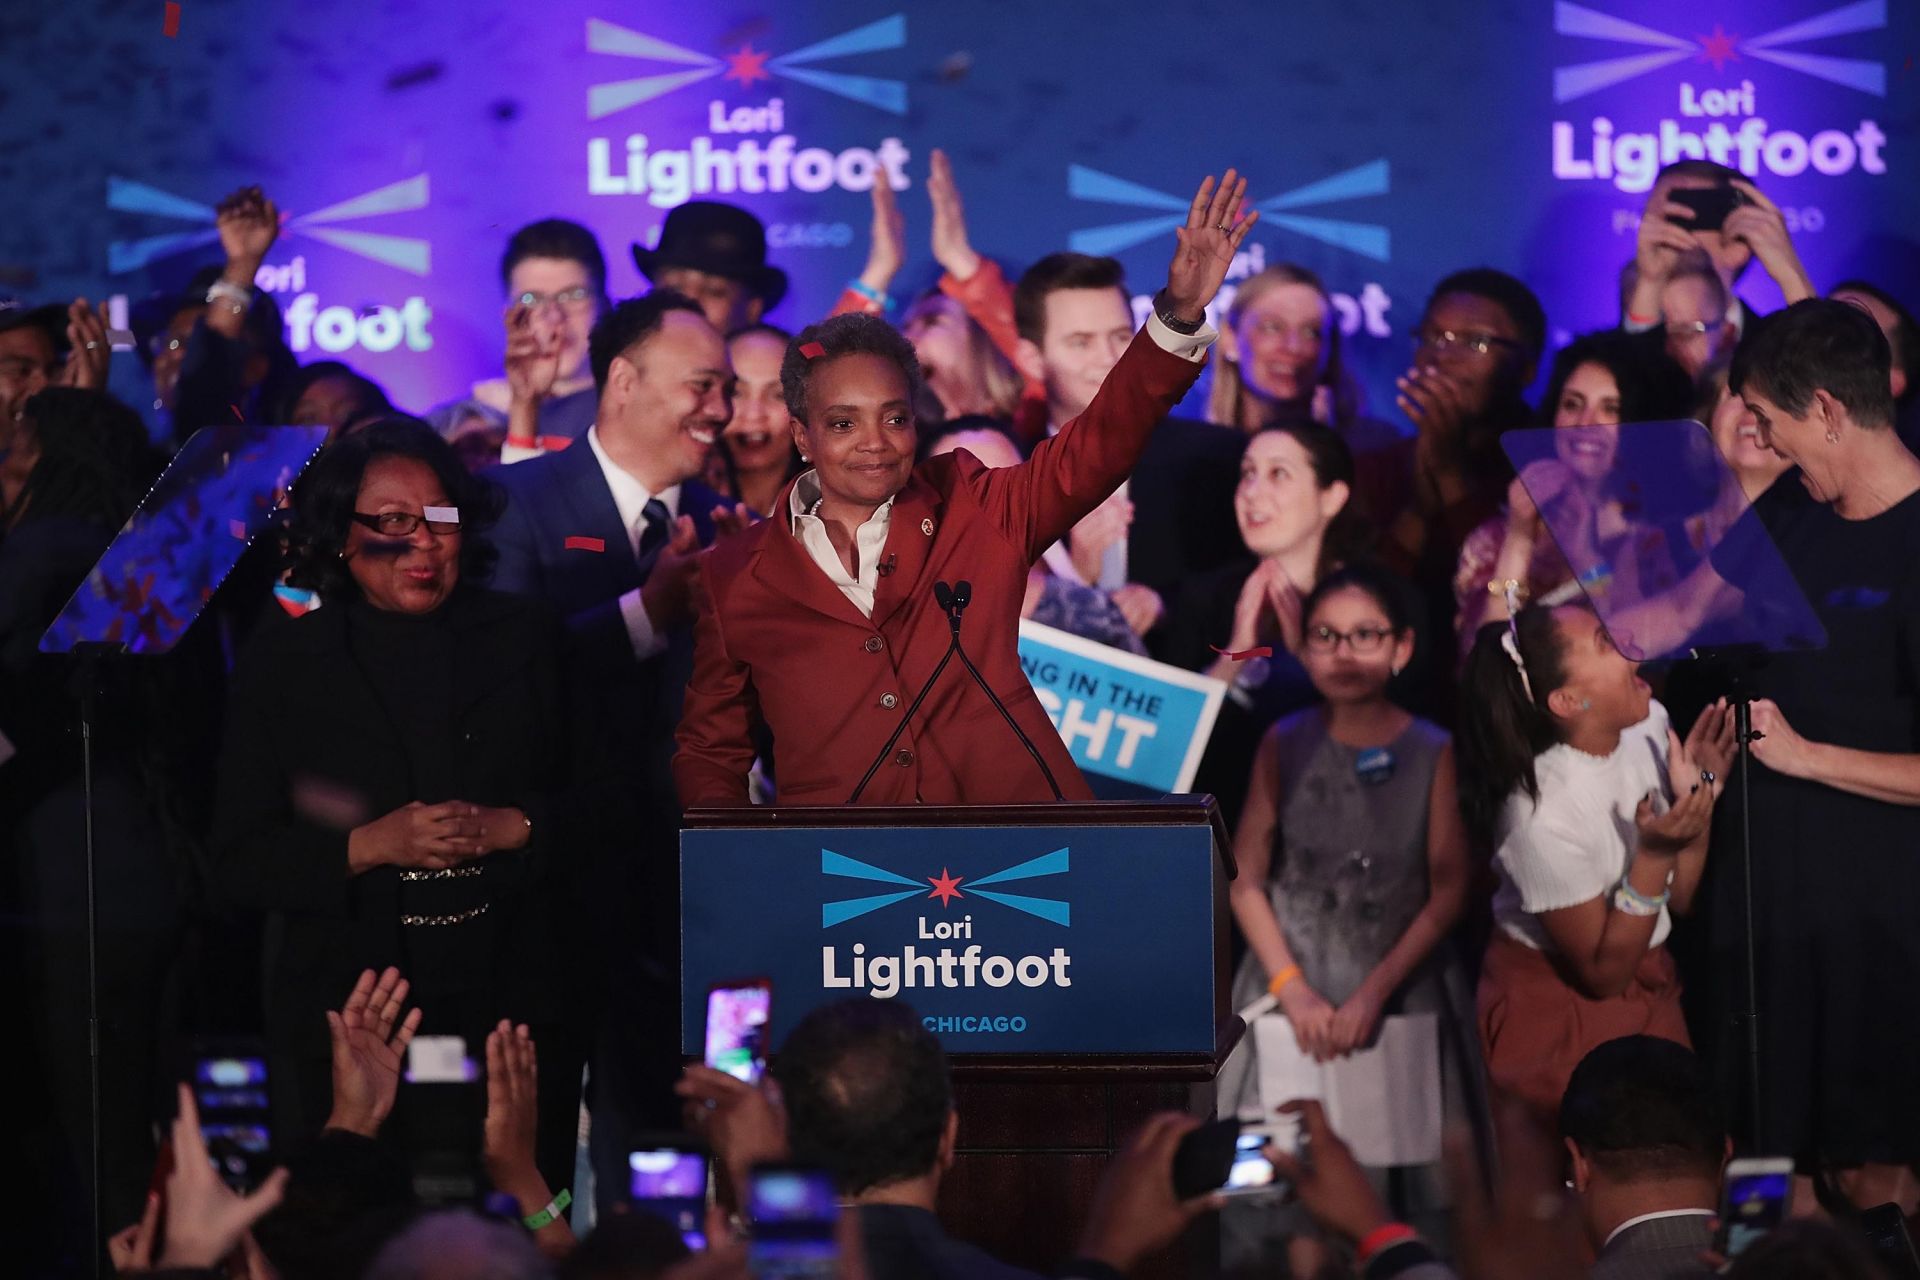  Лори Лайтфут афишира успеха си на изборите за кмет на Чикаго 